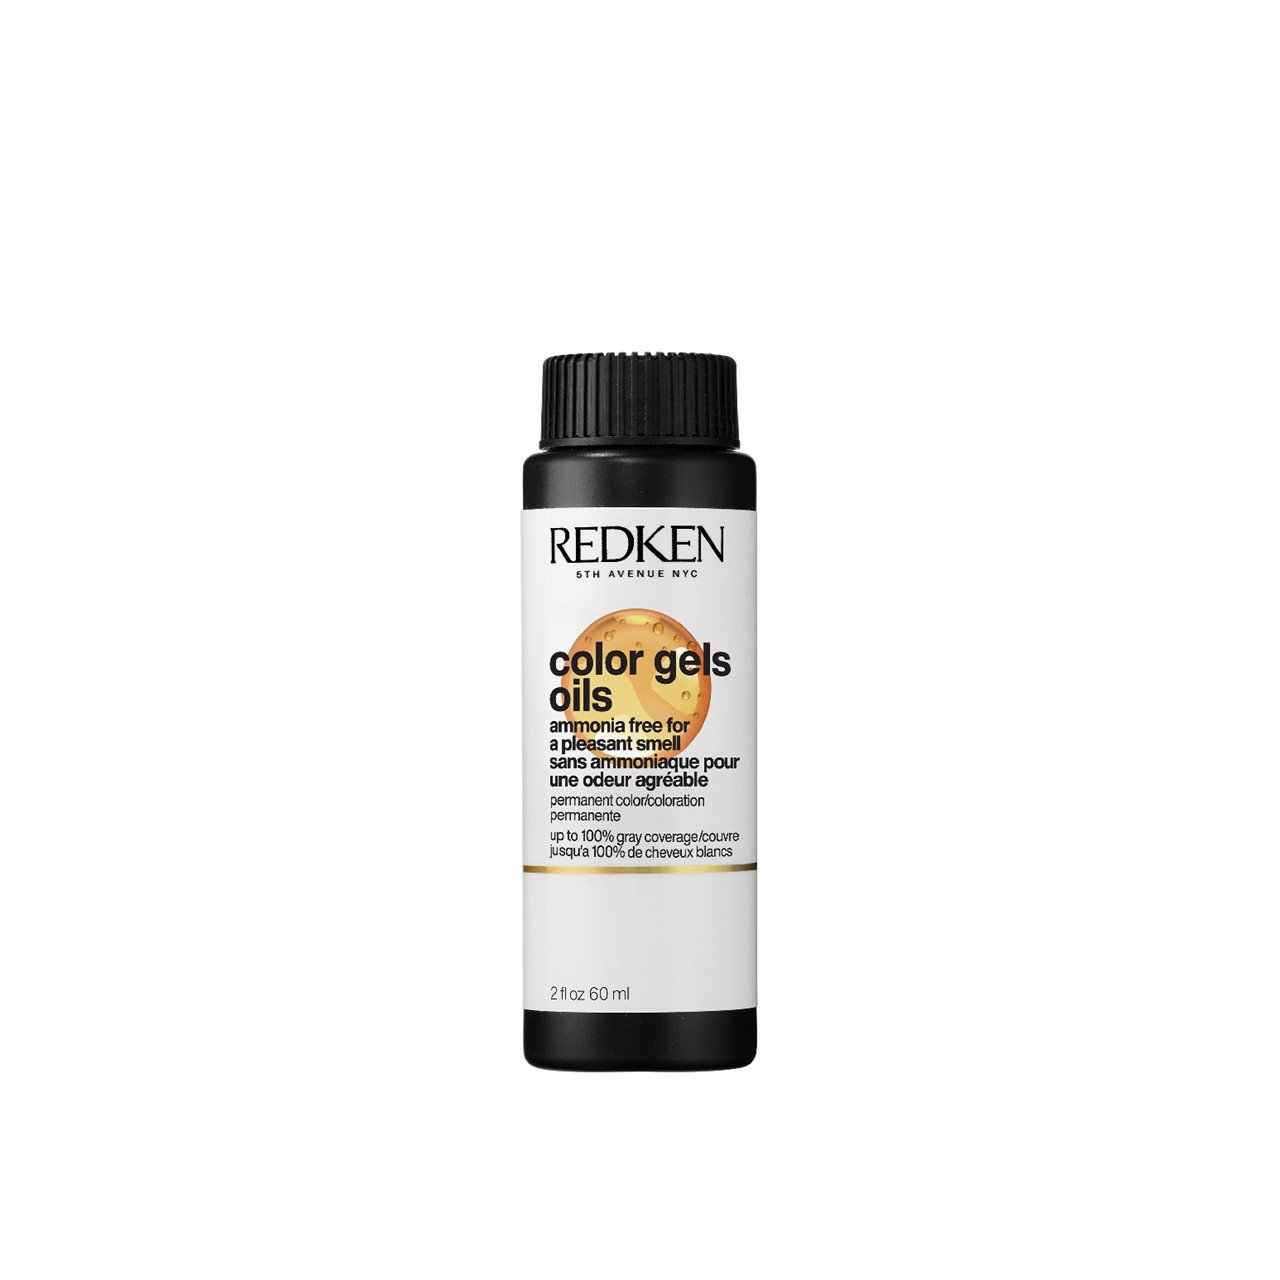 Redken Color Gels Oils 8NN Creme Brulee Permanent Hair Dye 60ml (2.03 fl oz)